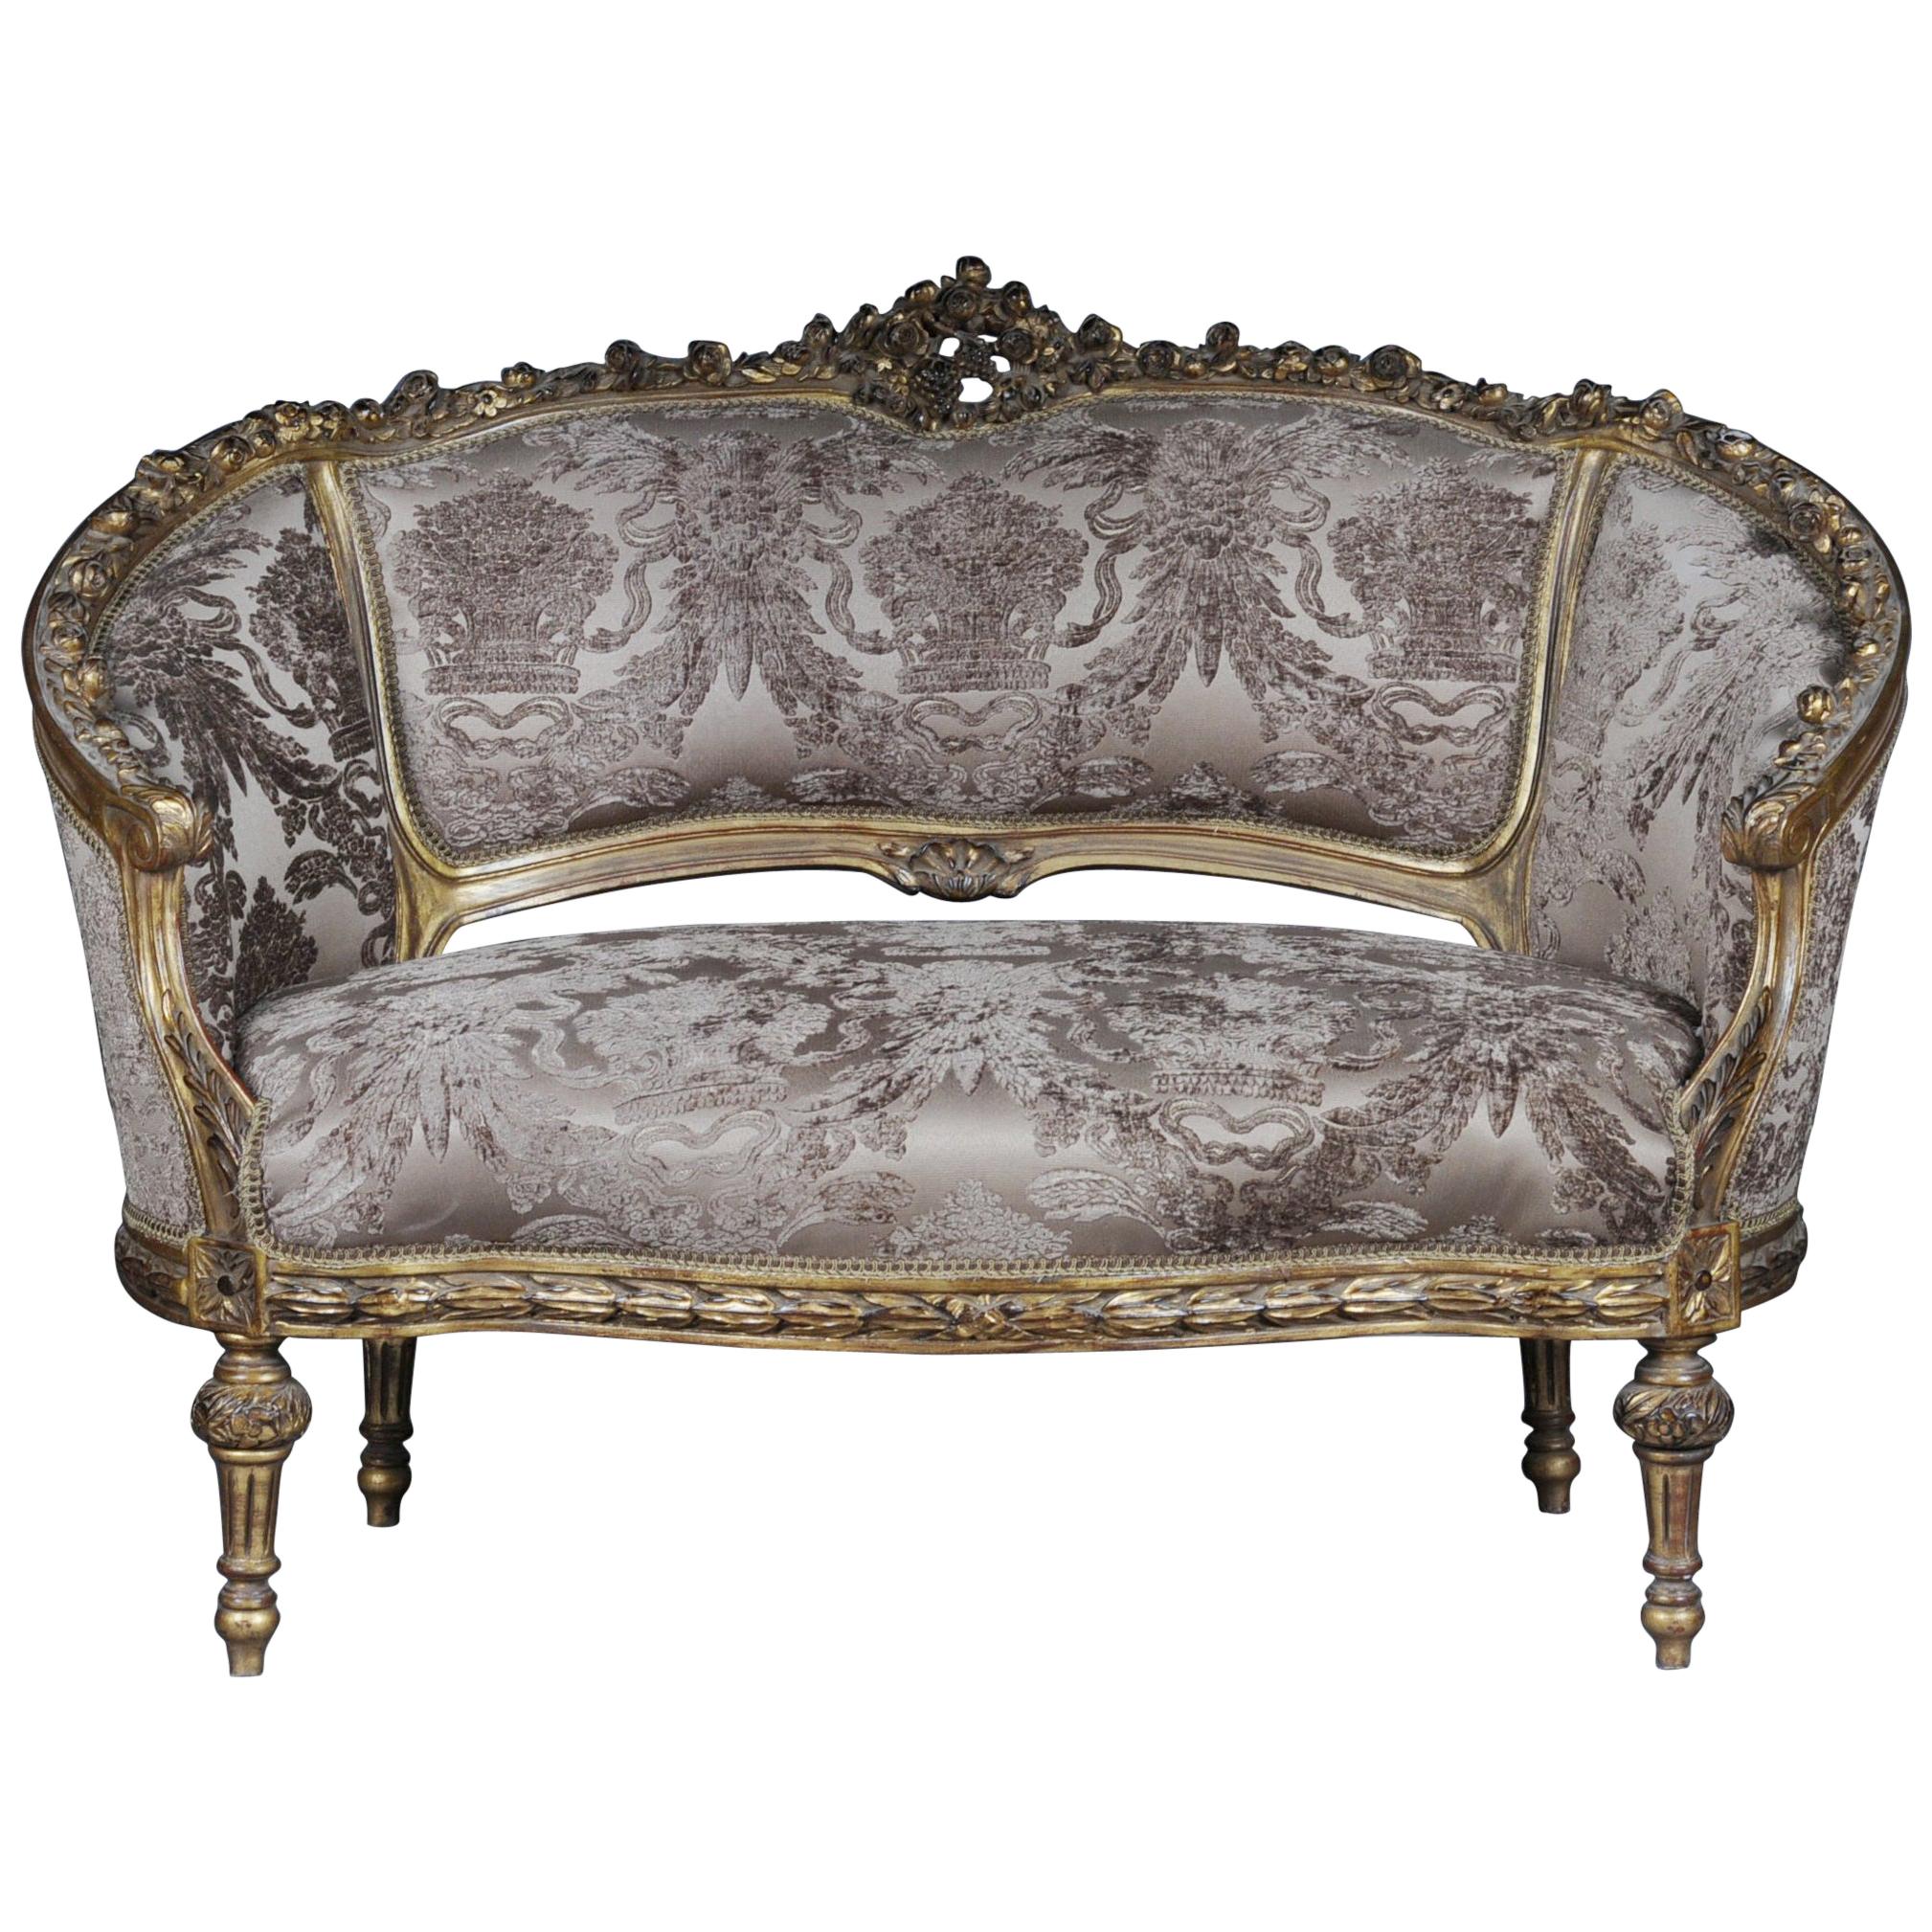 Decorative French Sofa, Canapé in Louis XVI Seize